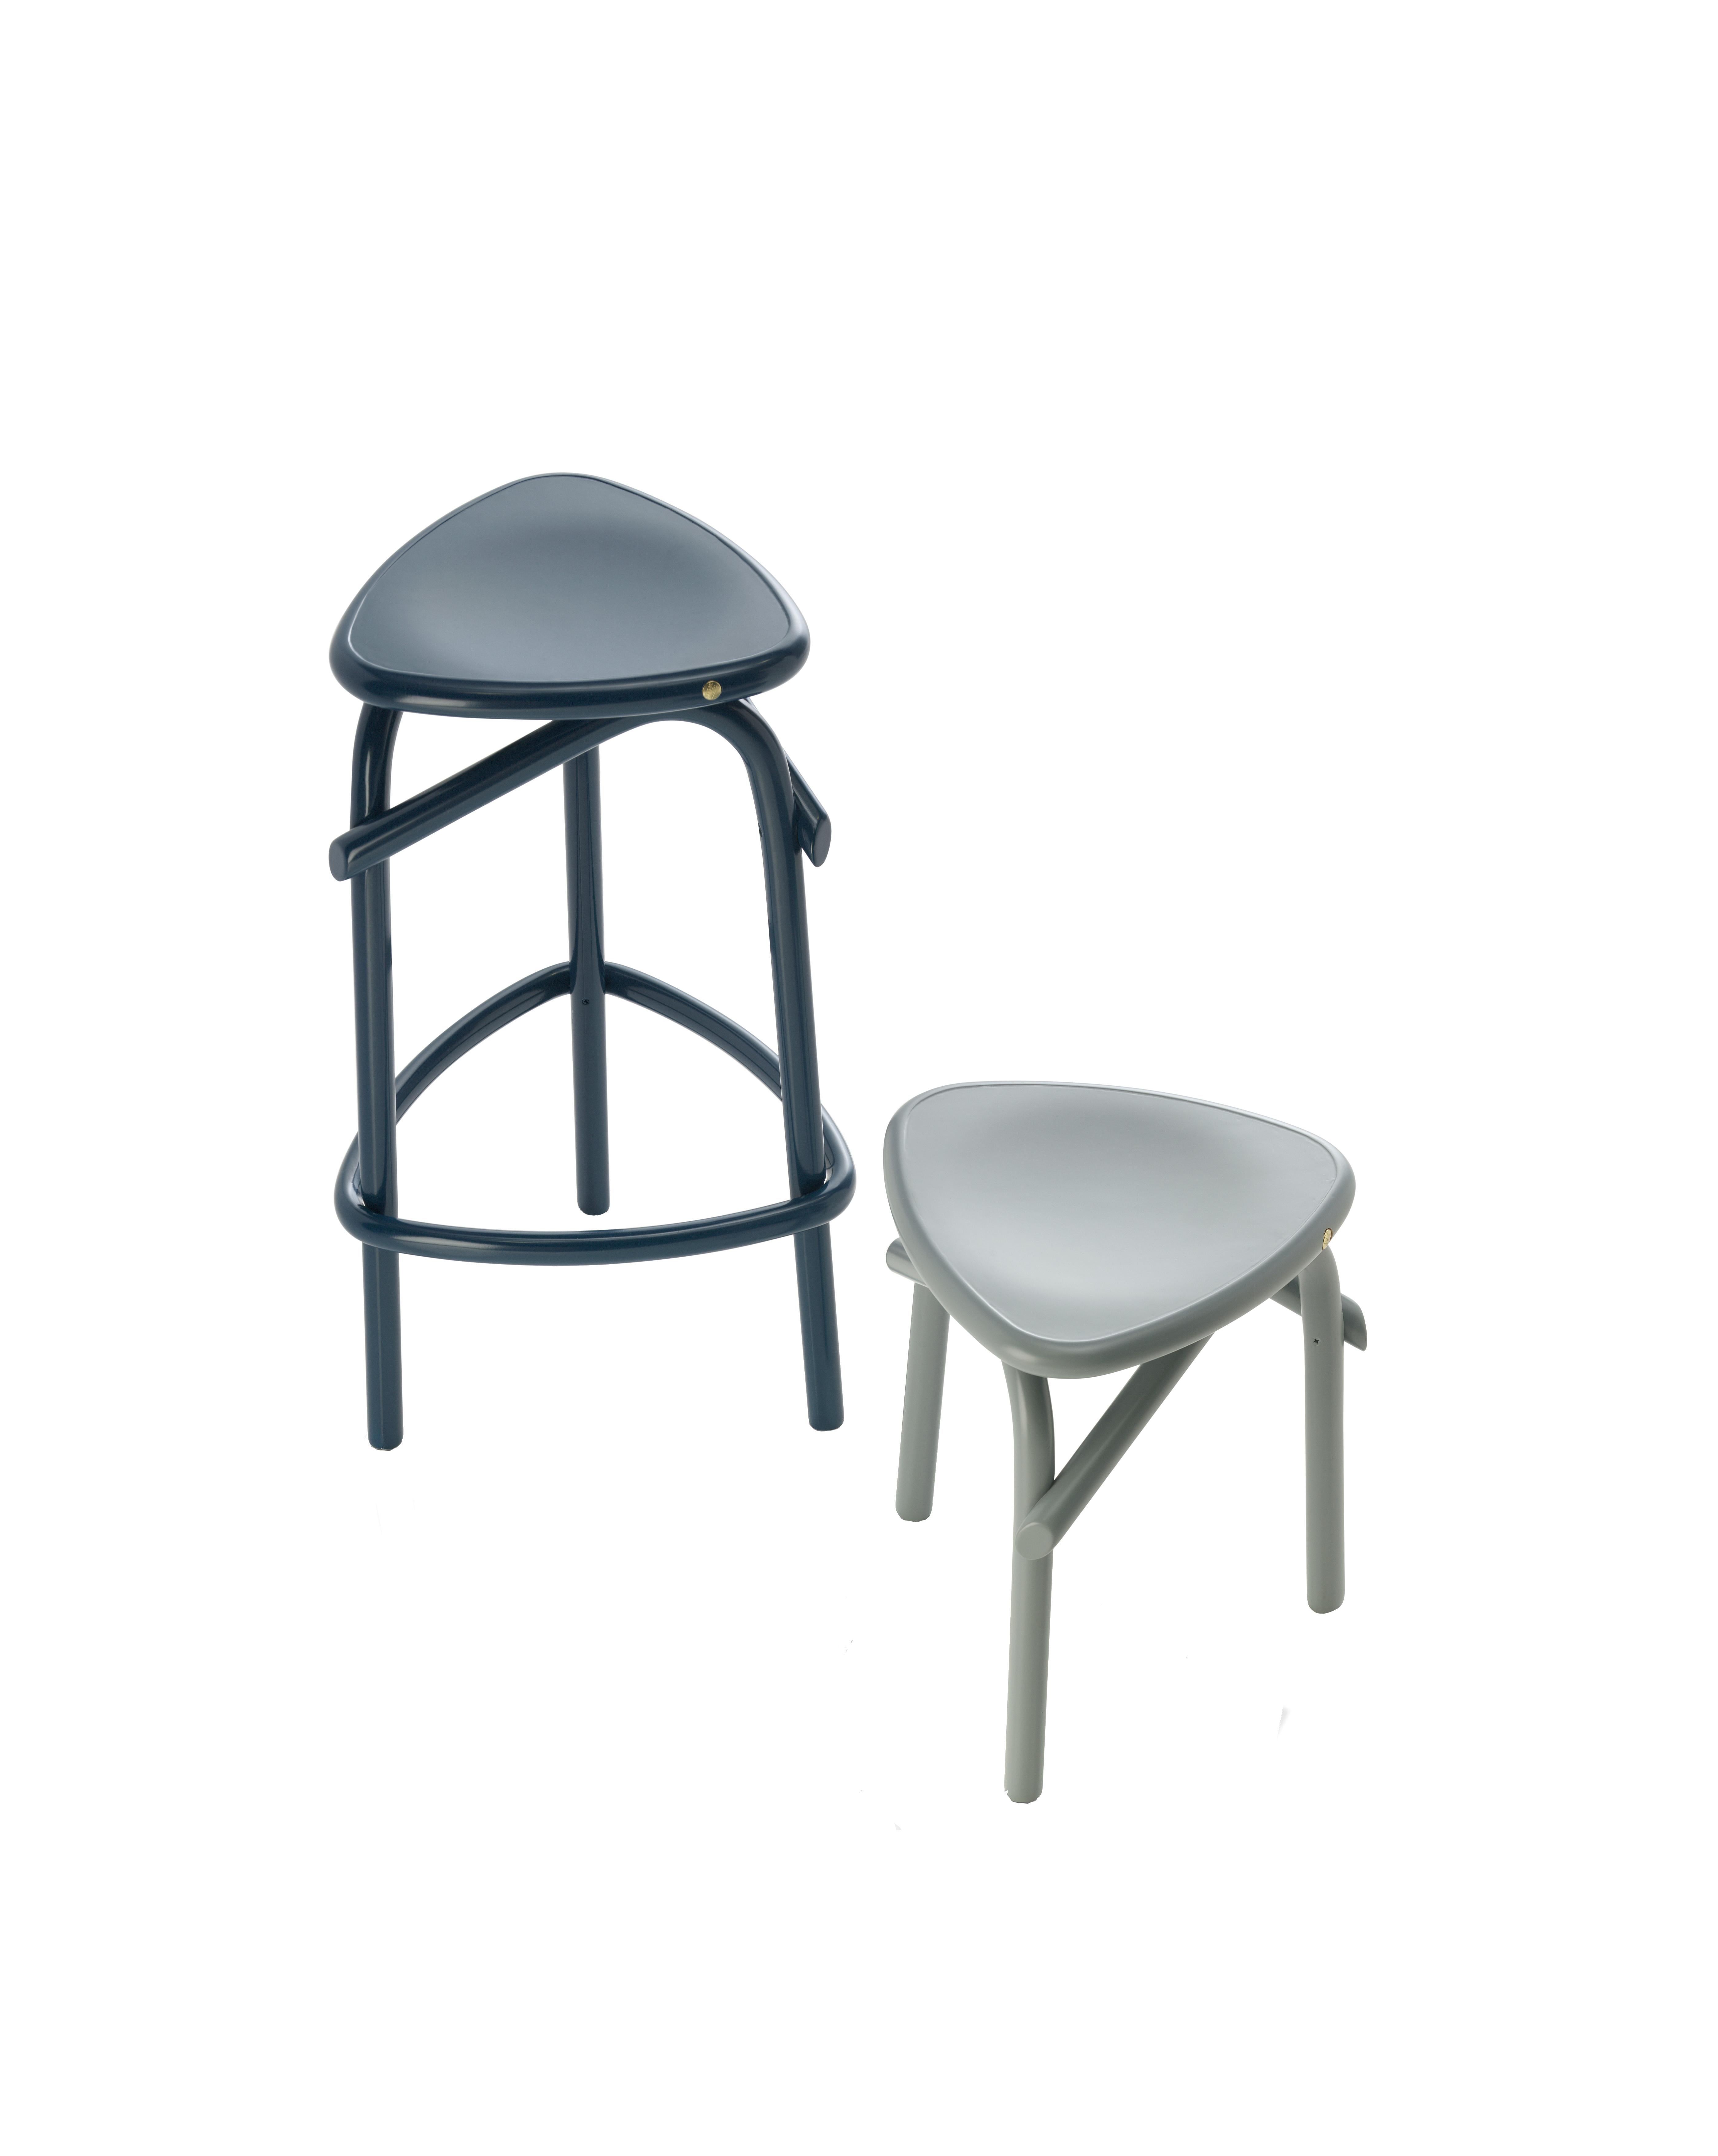 ocean bar stools